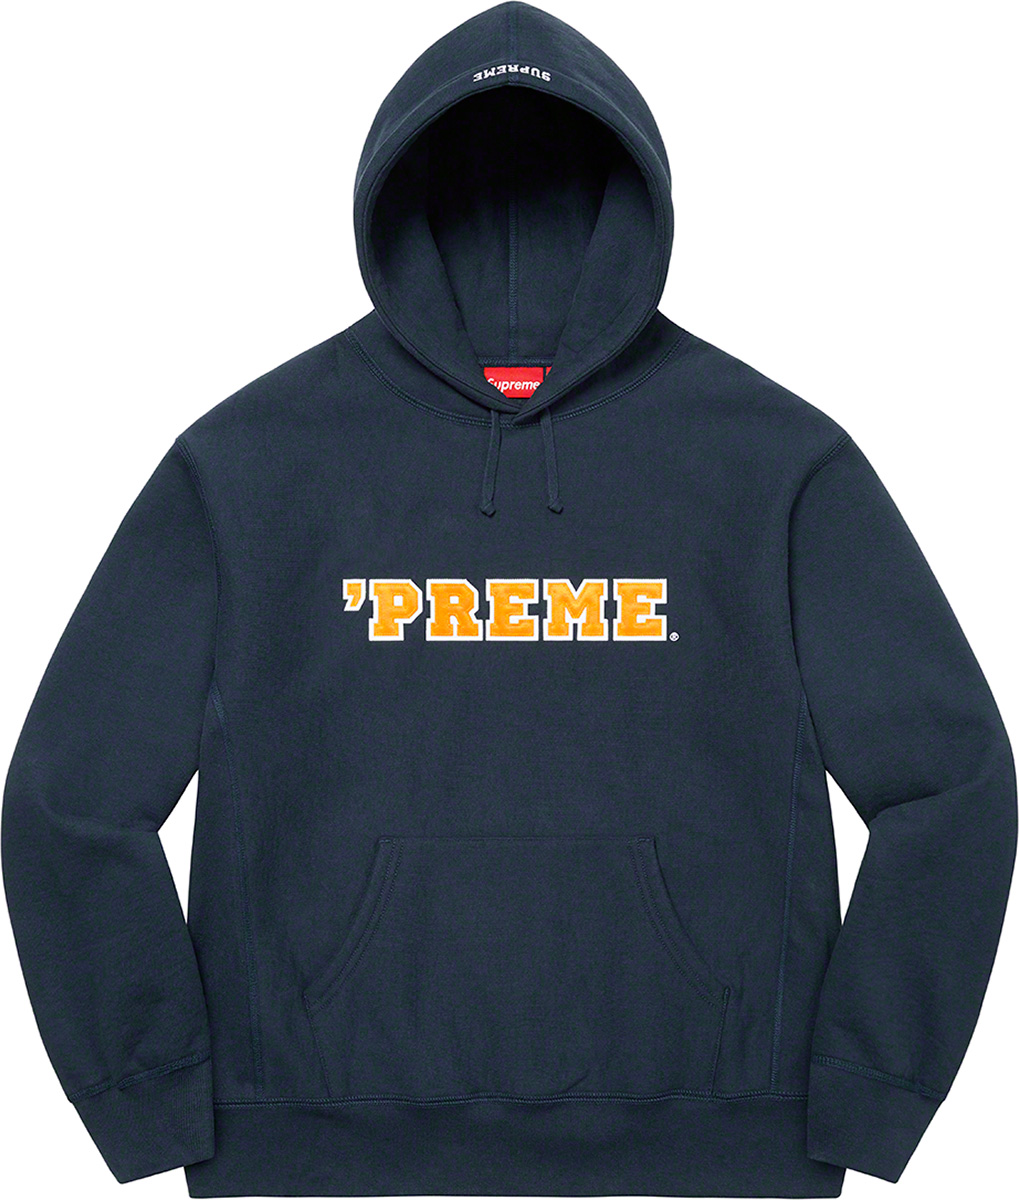 Supreme 'Preme Hooded Sweatshirt